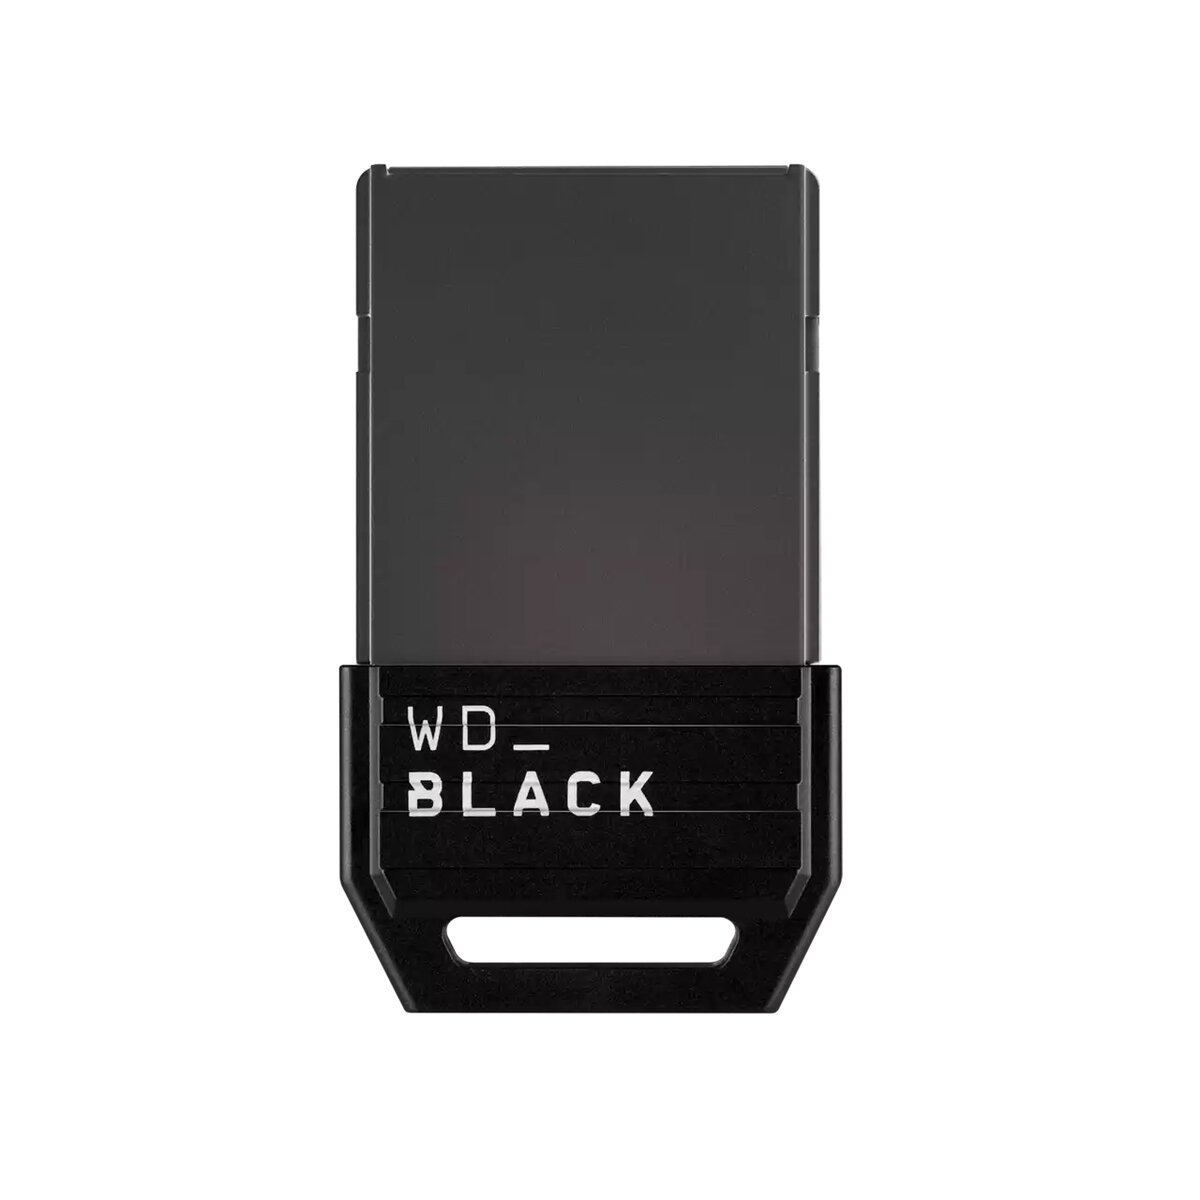 UNIDAD SSD EXTERNO WD BLACK C50 512GB WDBMPH5120ANC-WCSN TARJETA XBOX